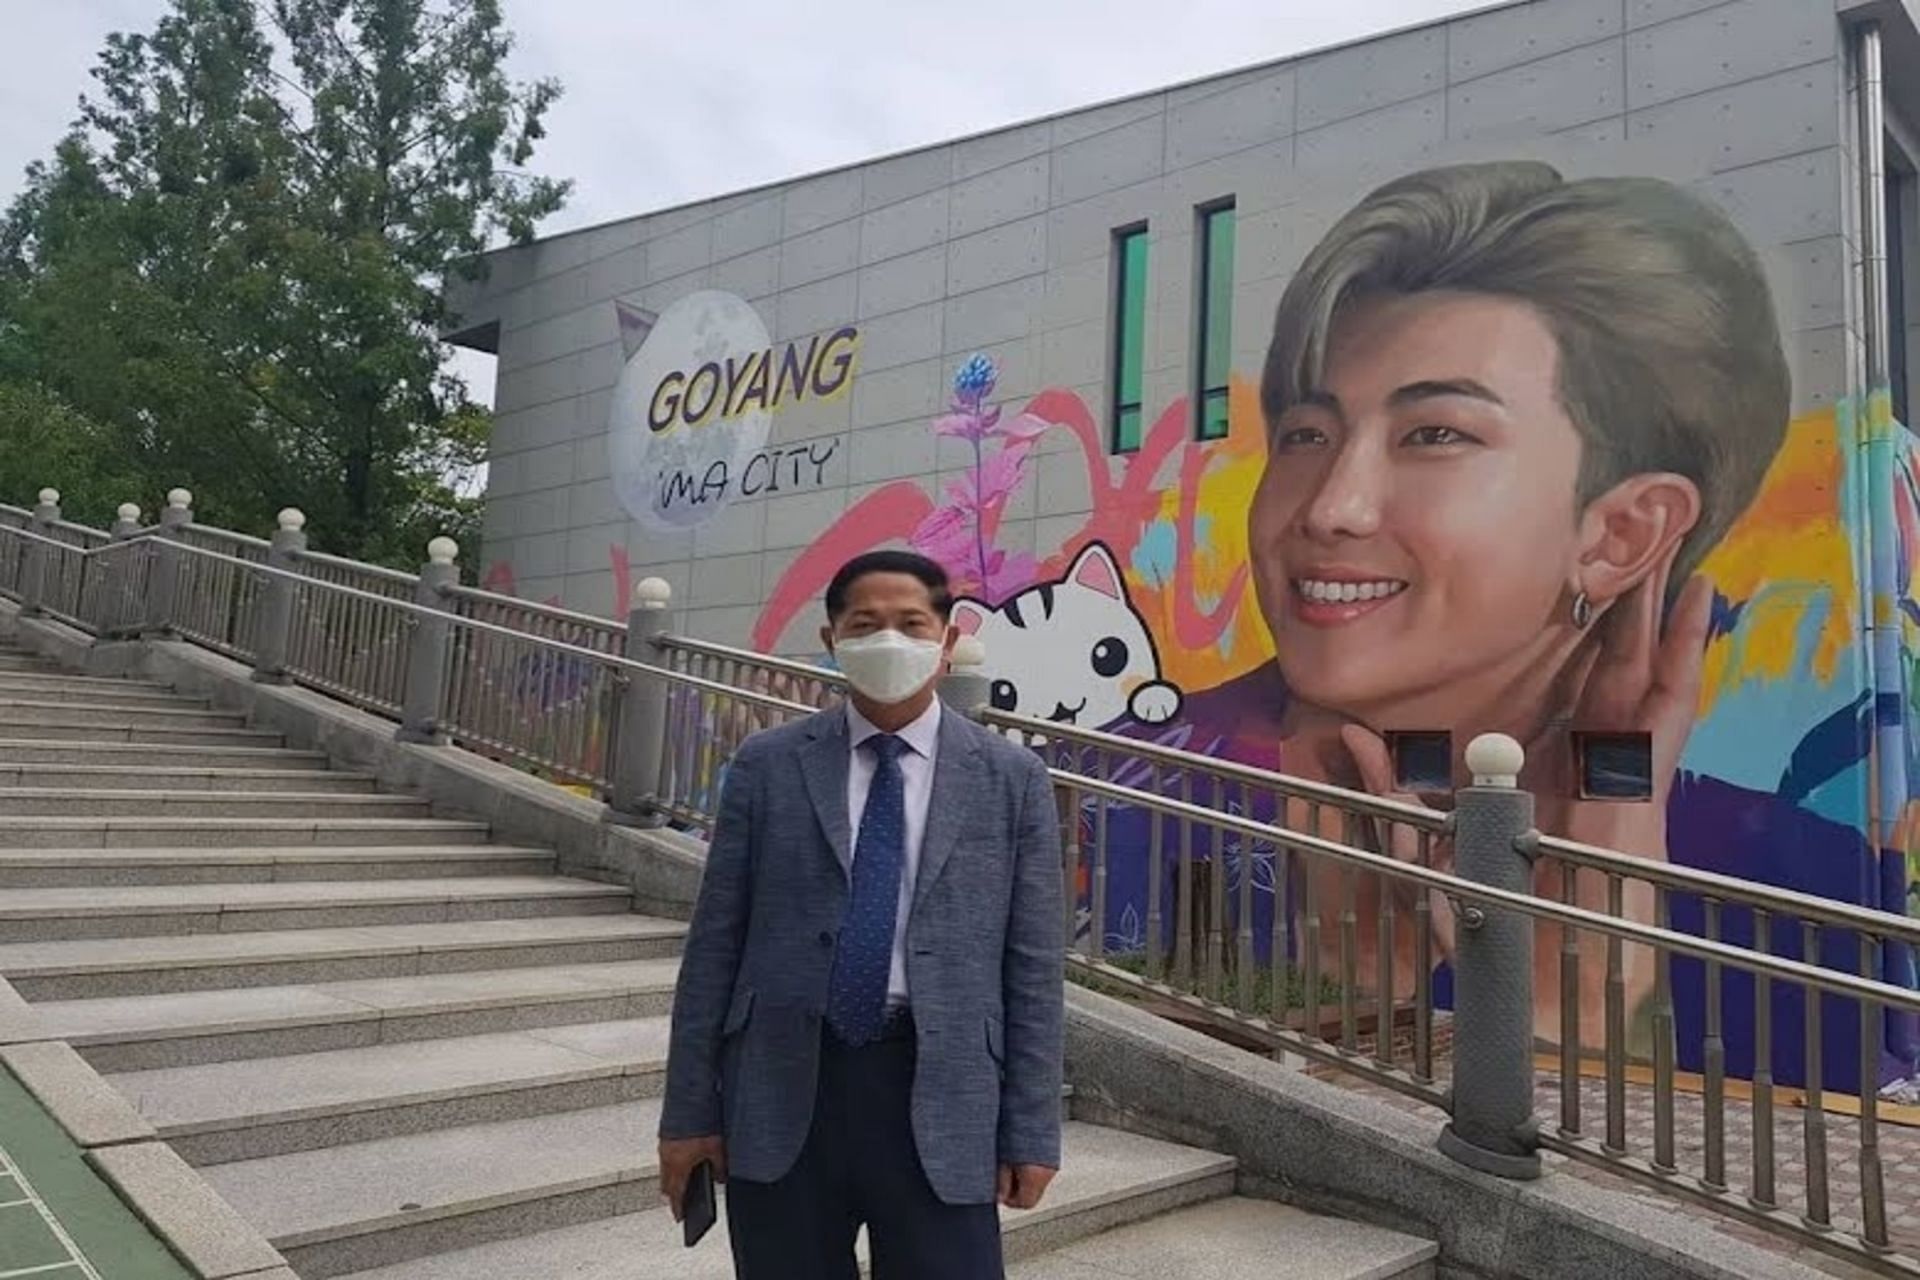 BTS RM&#039;s mural in the city of Goyang, South Korea (Image via @1eejaejoon on Instagram)